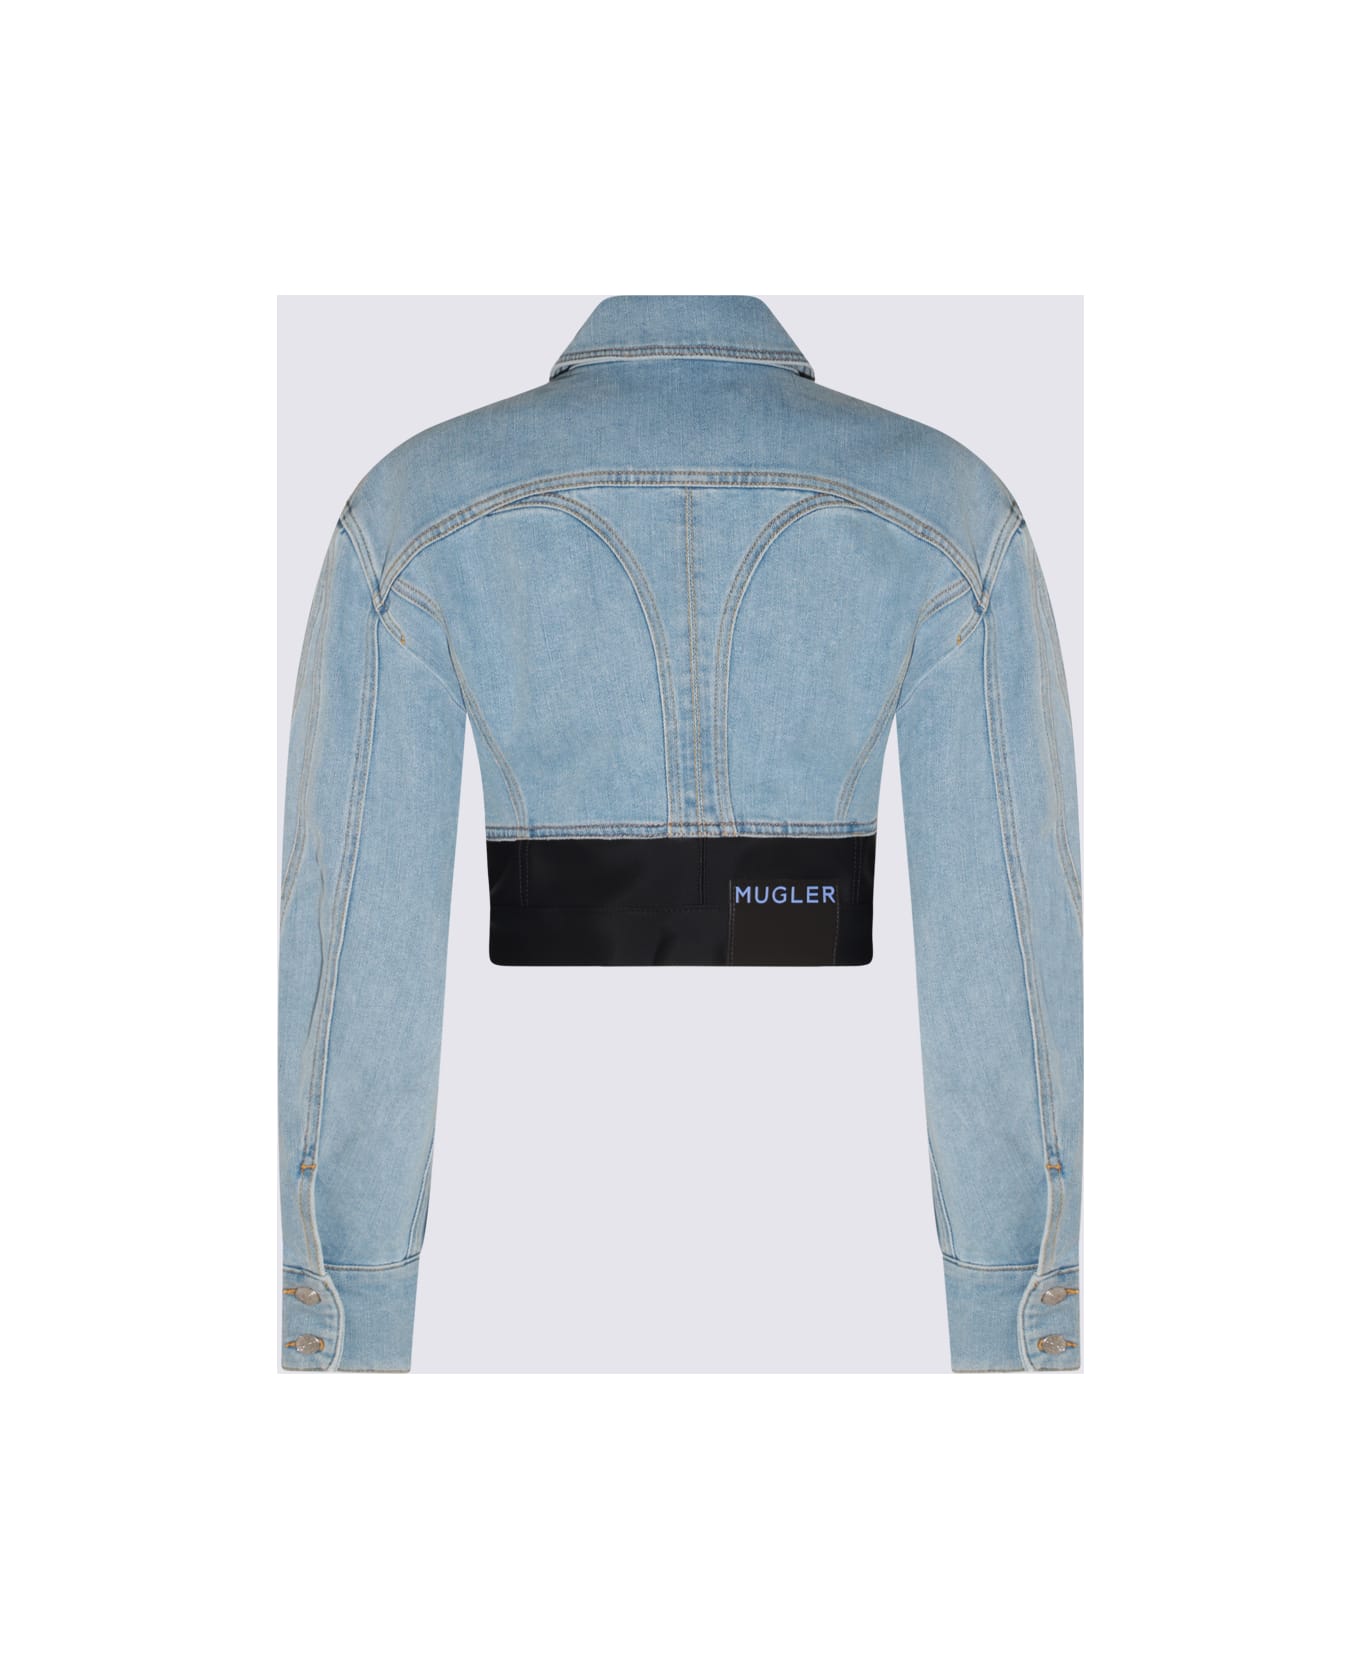 Mugler Light Blue Cotton Denim Jacket - LIGHT BLUE/BLACK ジャケット